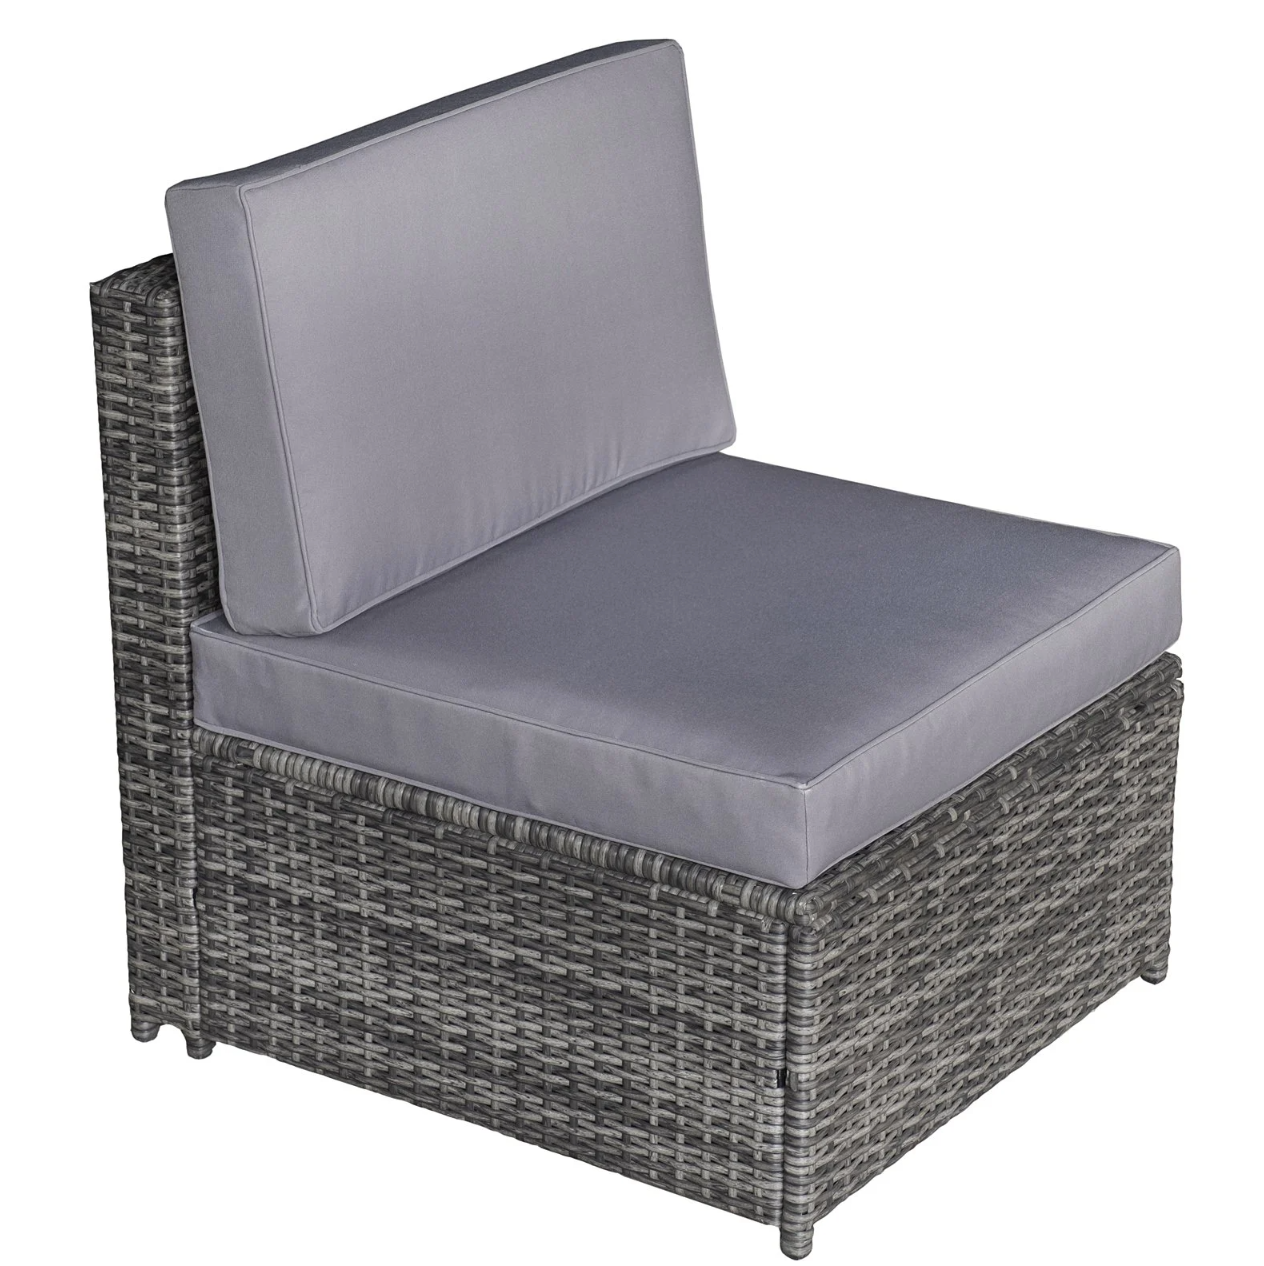 Nancy's Sanger Lounge set - Garden set - Storage baskets - Sofas - Seating set - Side table - Gray - Polyrattan - Steel